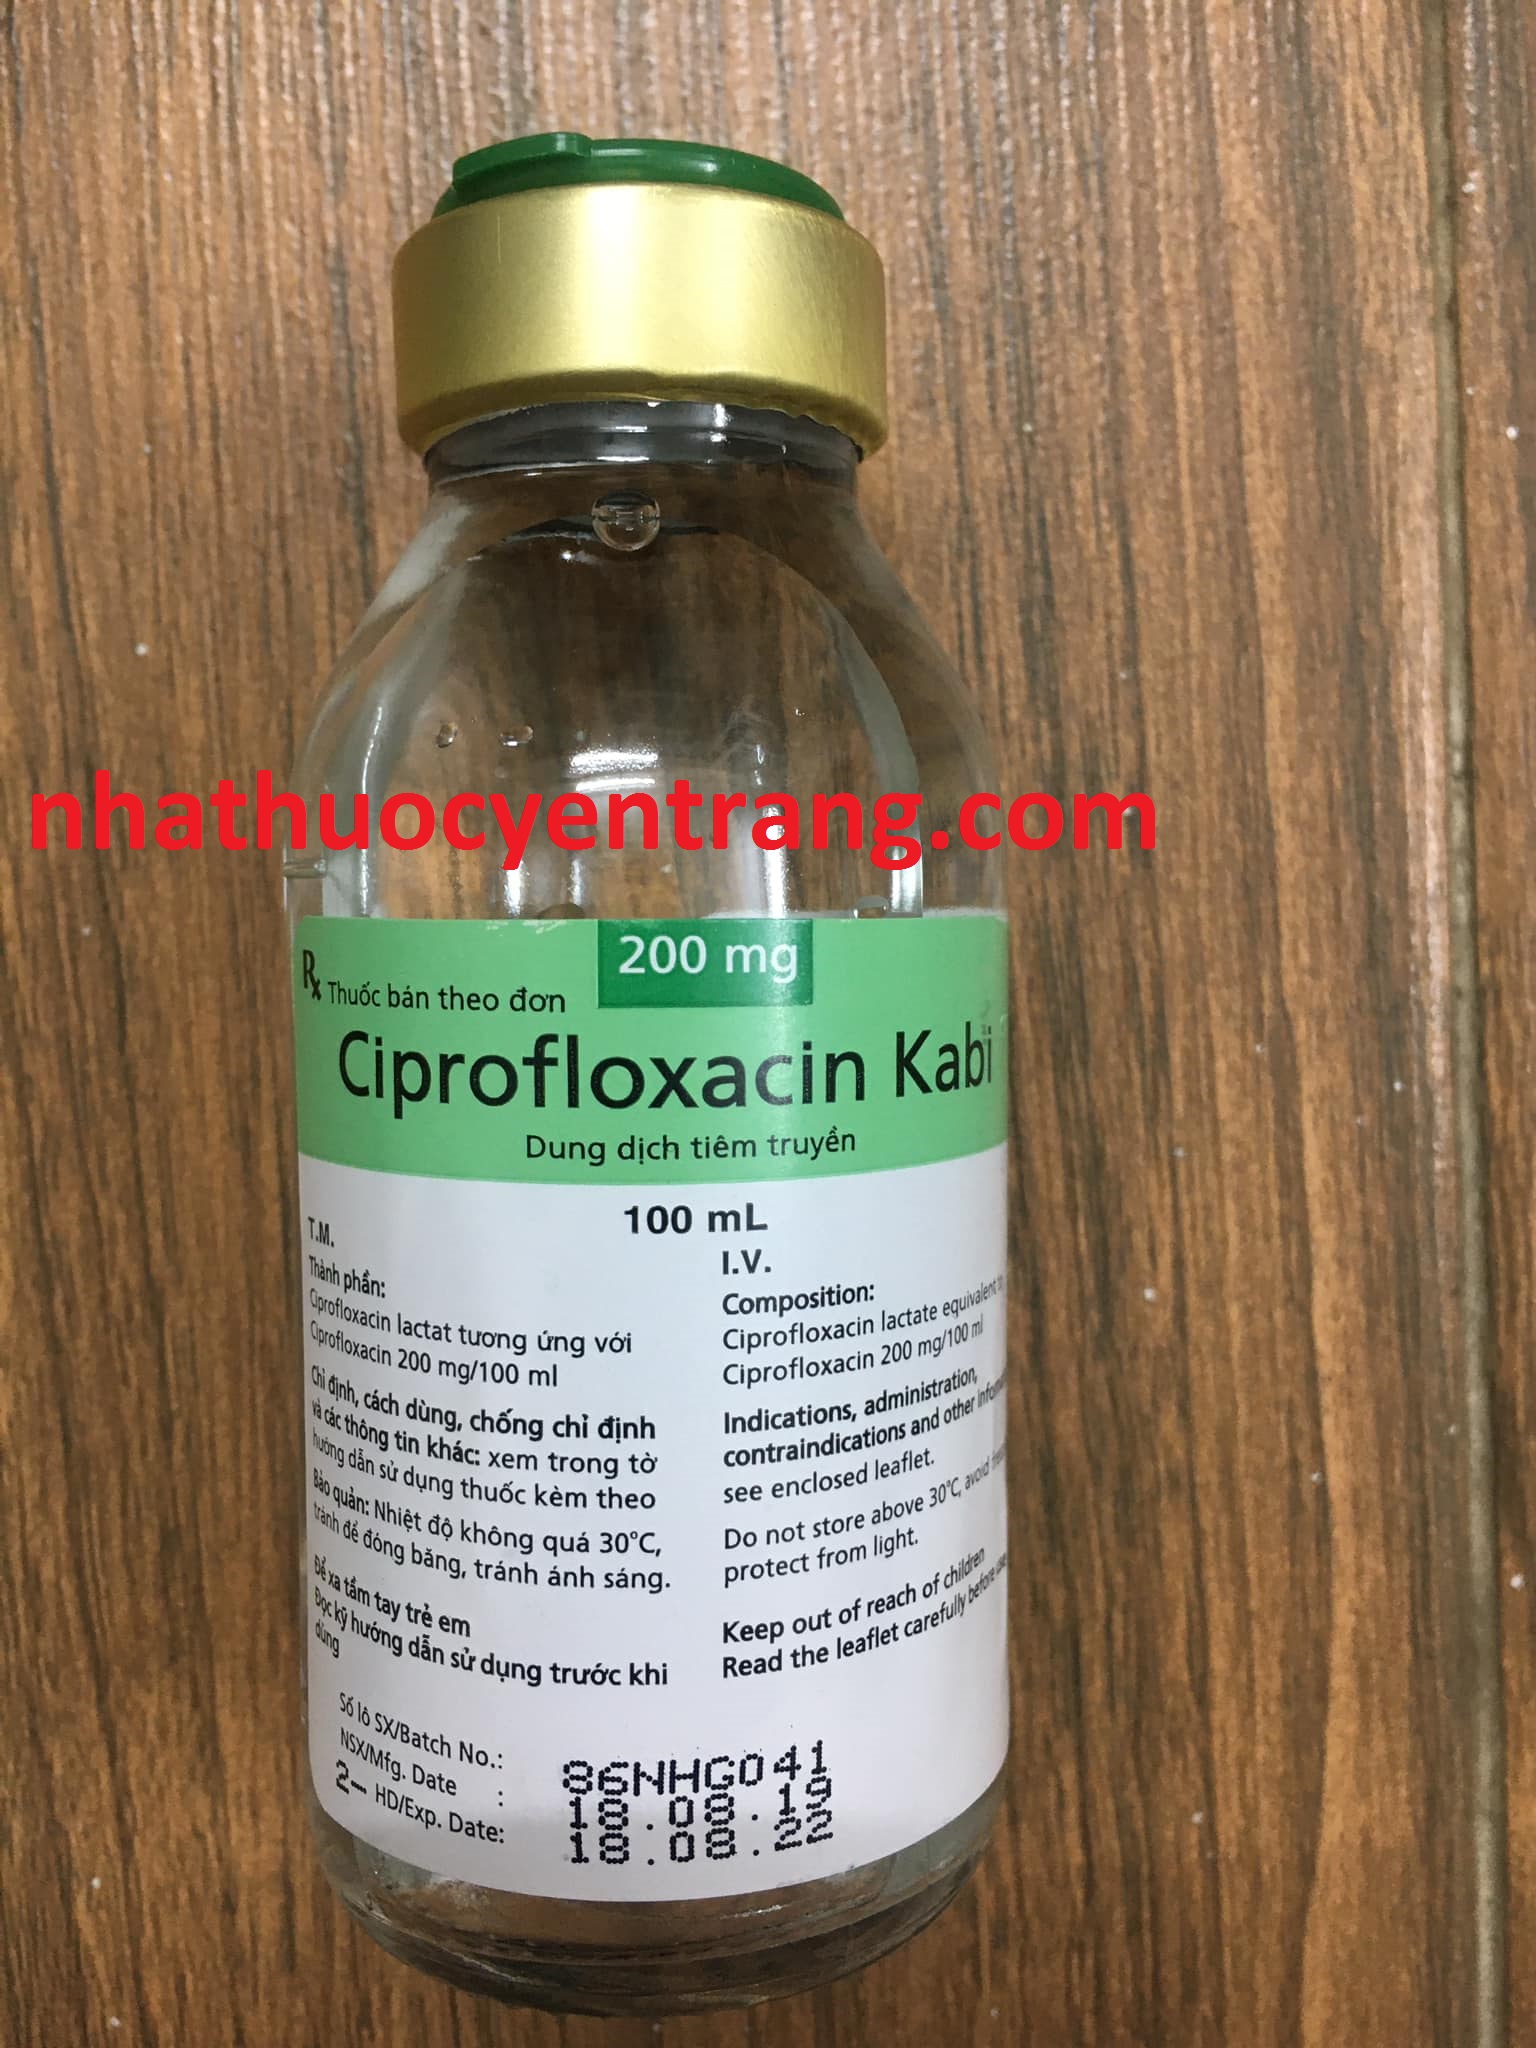 Ciprofloxacin Kabi 200mg/100ml